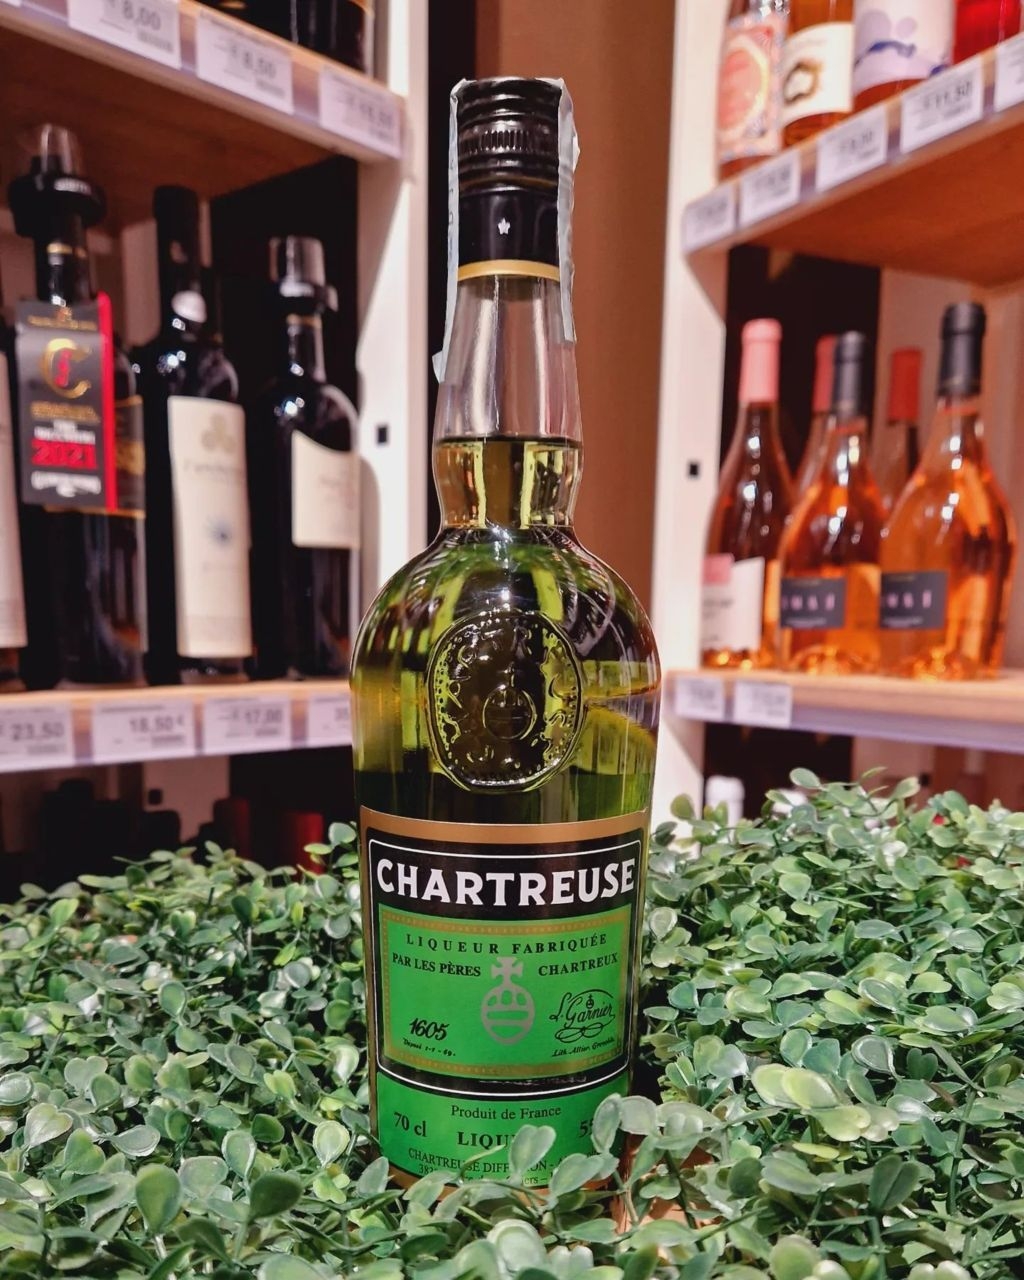 CHARTREUSE Liquori Chartreuse Verte 70